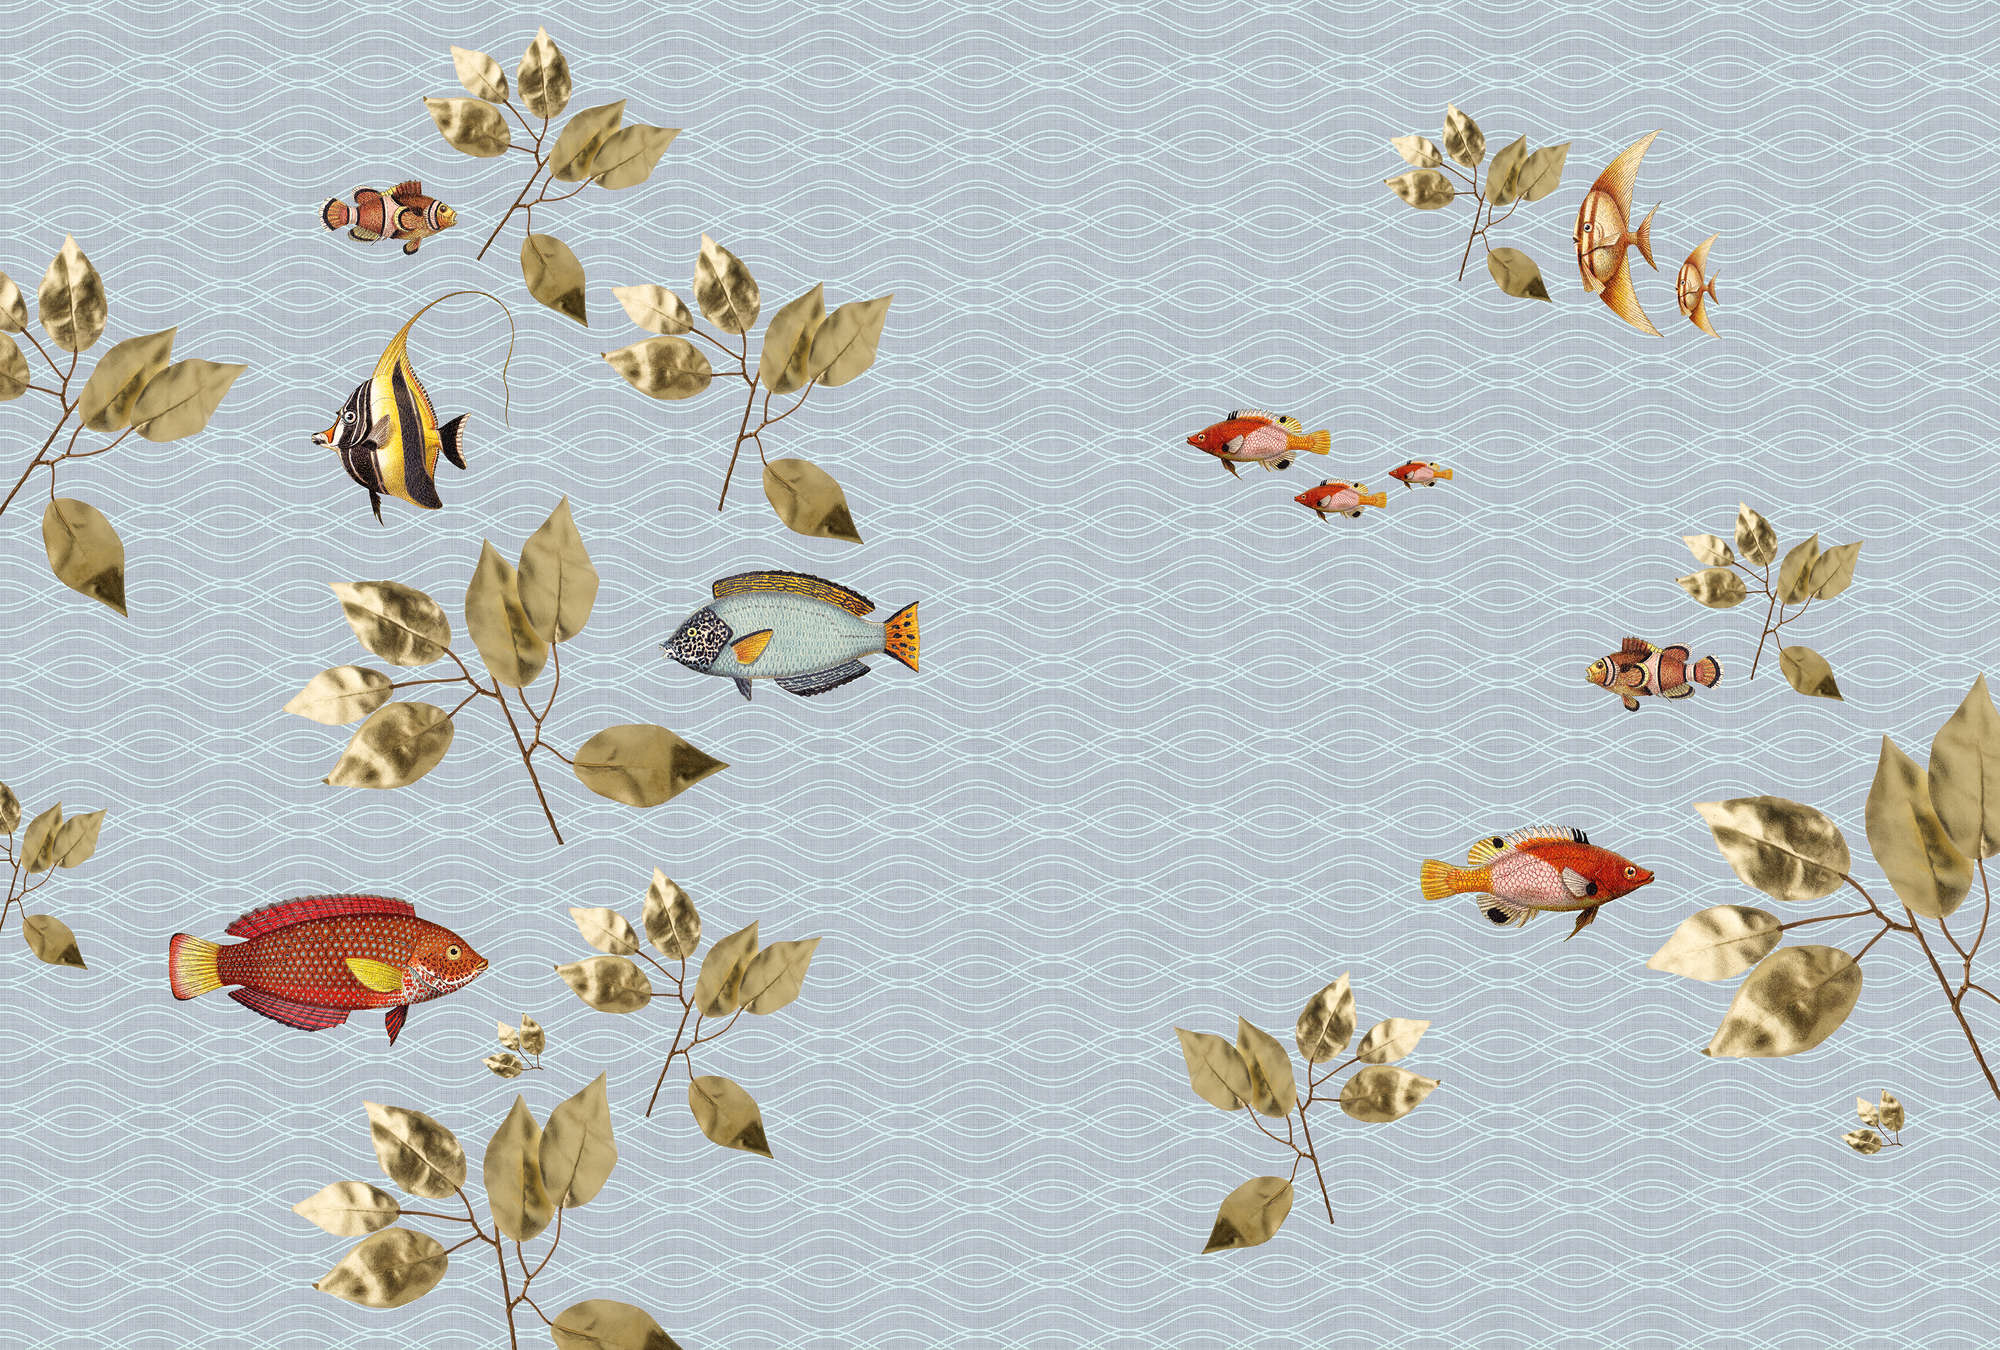             Briljante vissen 1 - Vliegende vissen behang in natuurlijke linnenstructuur - Blauw | parelmoer glad vlies
        